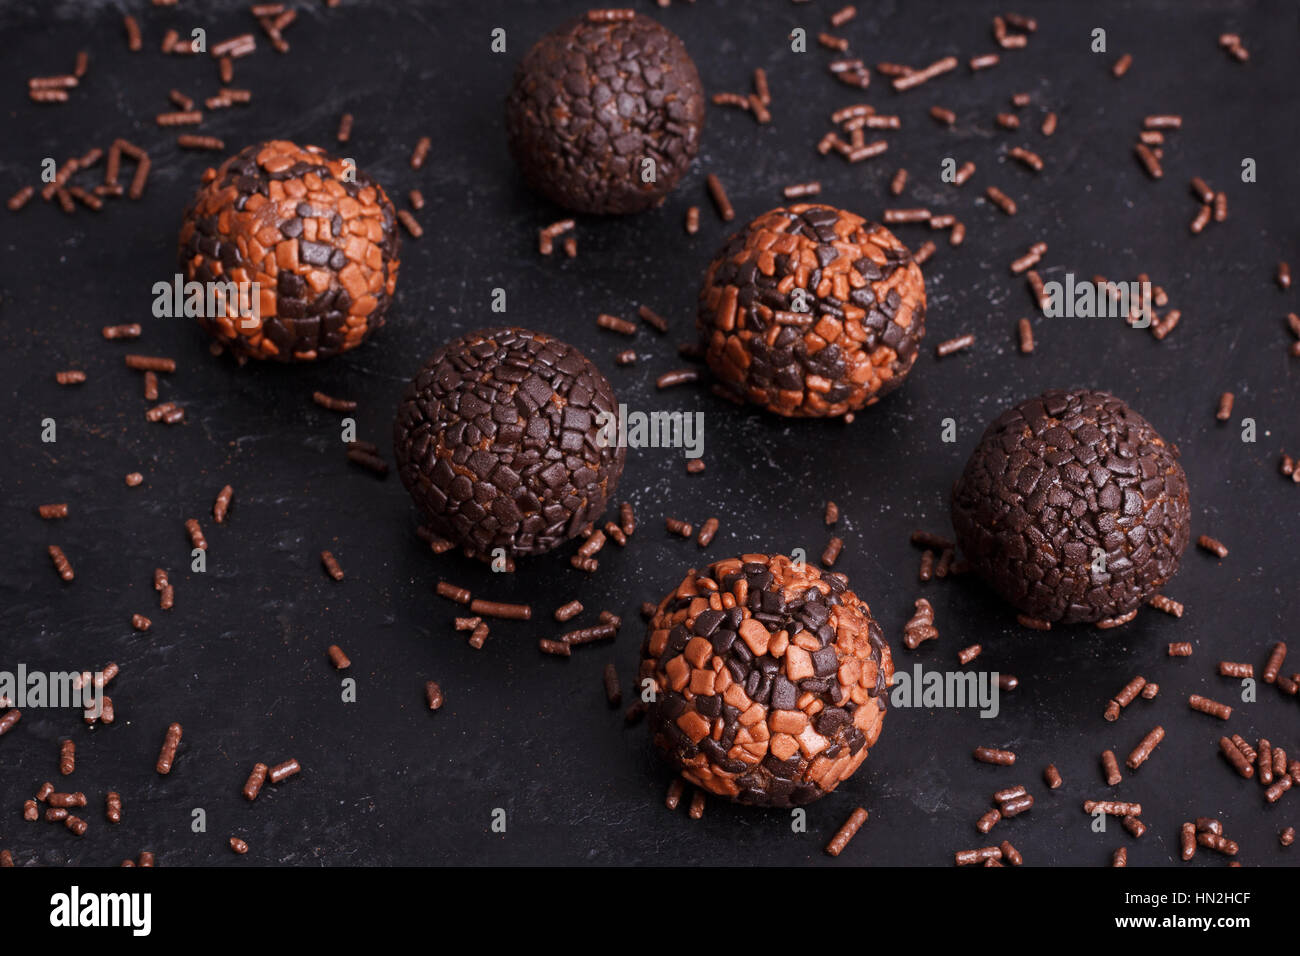 Brazilian chocolate truffle bonbon brigadeiro on black background. Selective focus Stock Photo